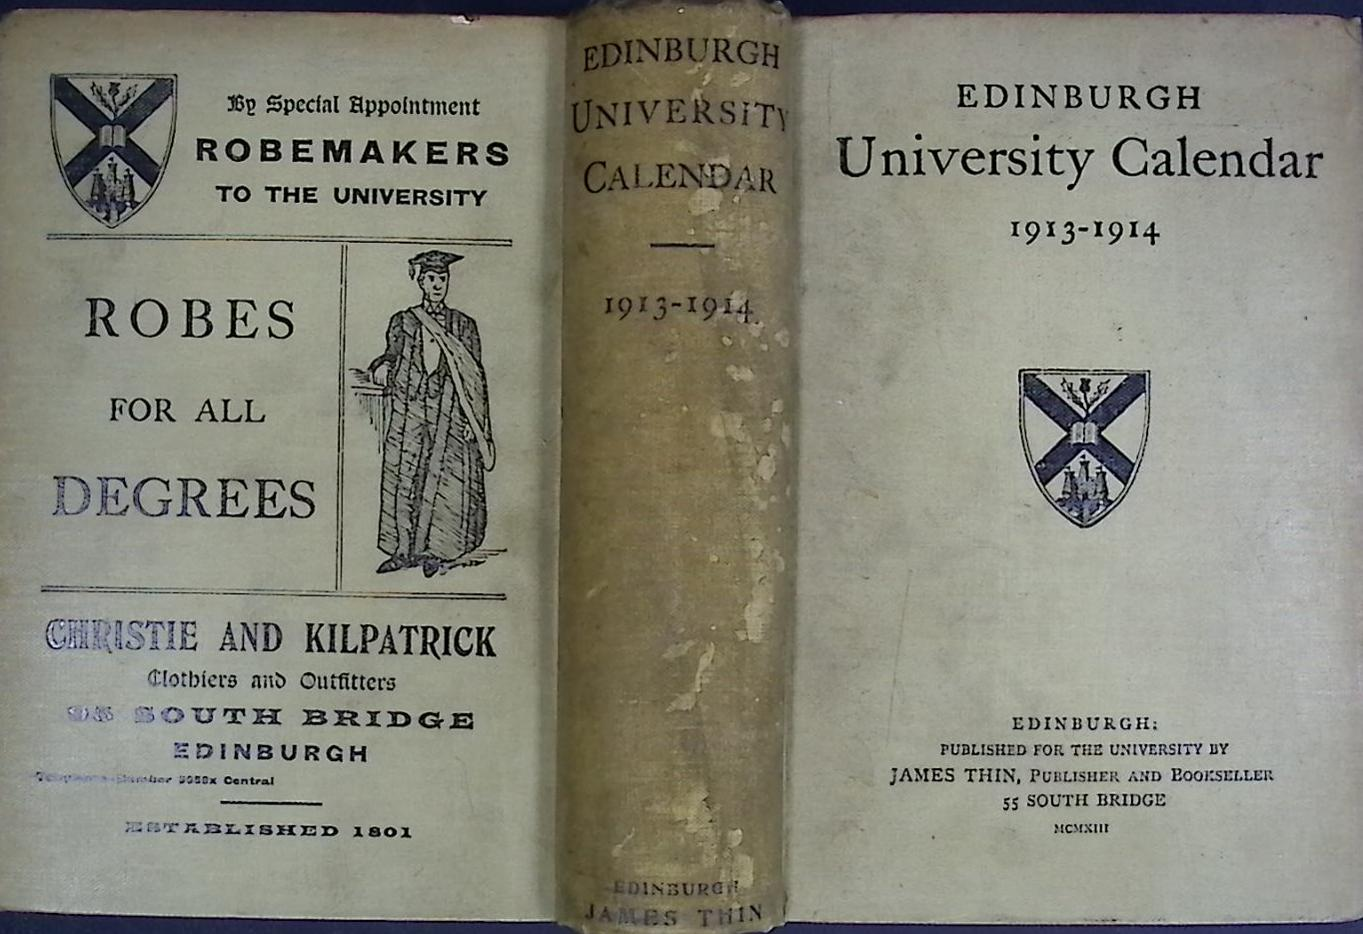 The Edinburgh University Calendar. 1913-1914.